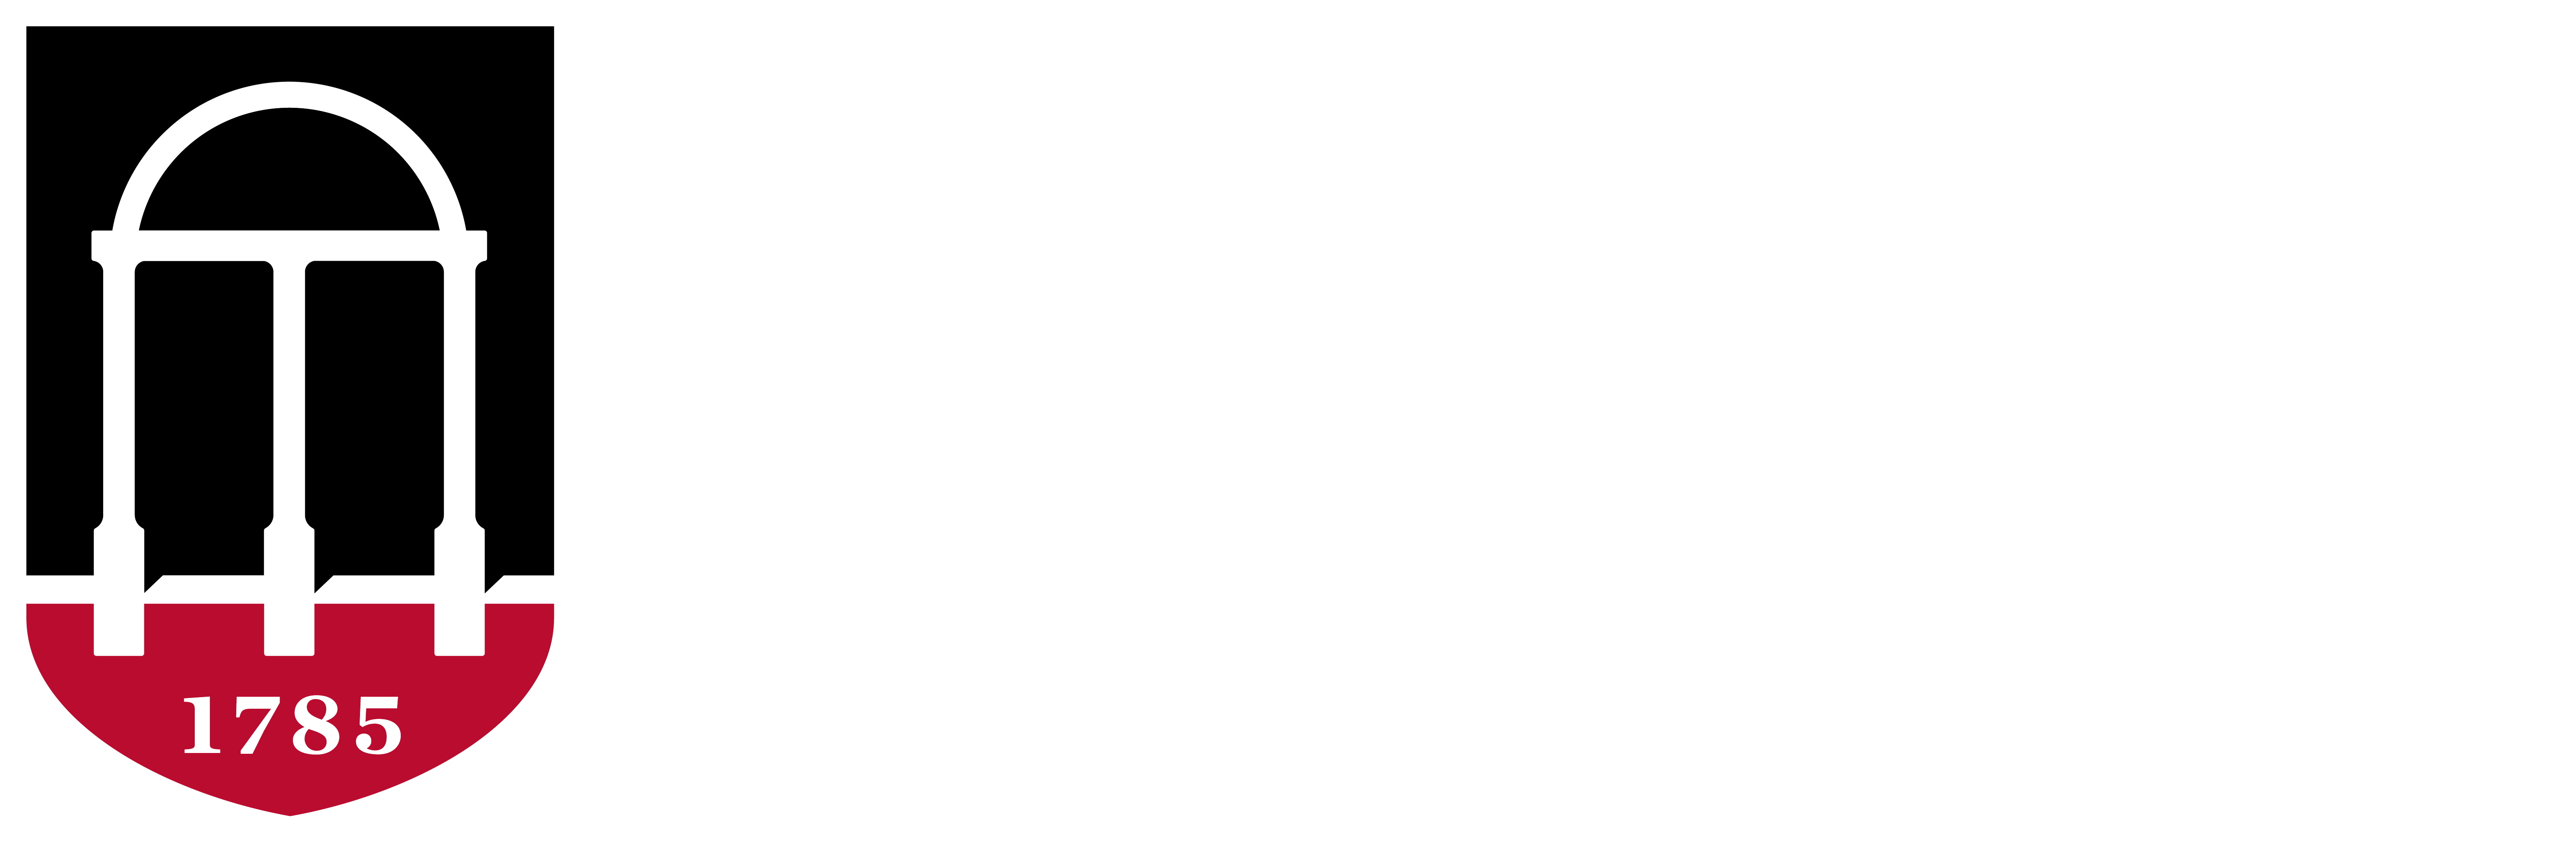 University of Georgia logo, horizontally-aligned